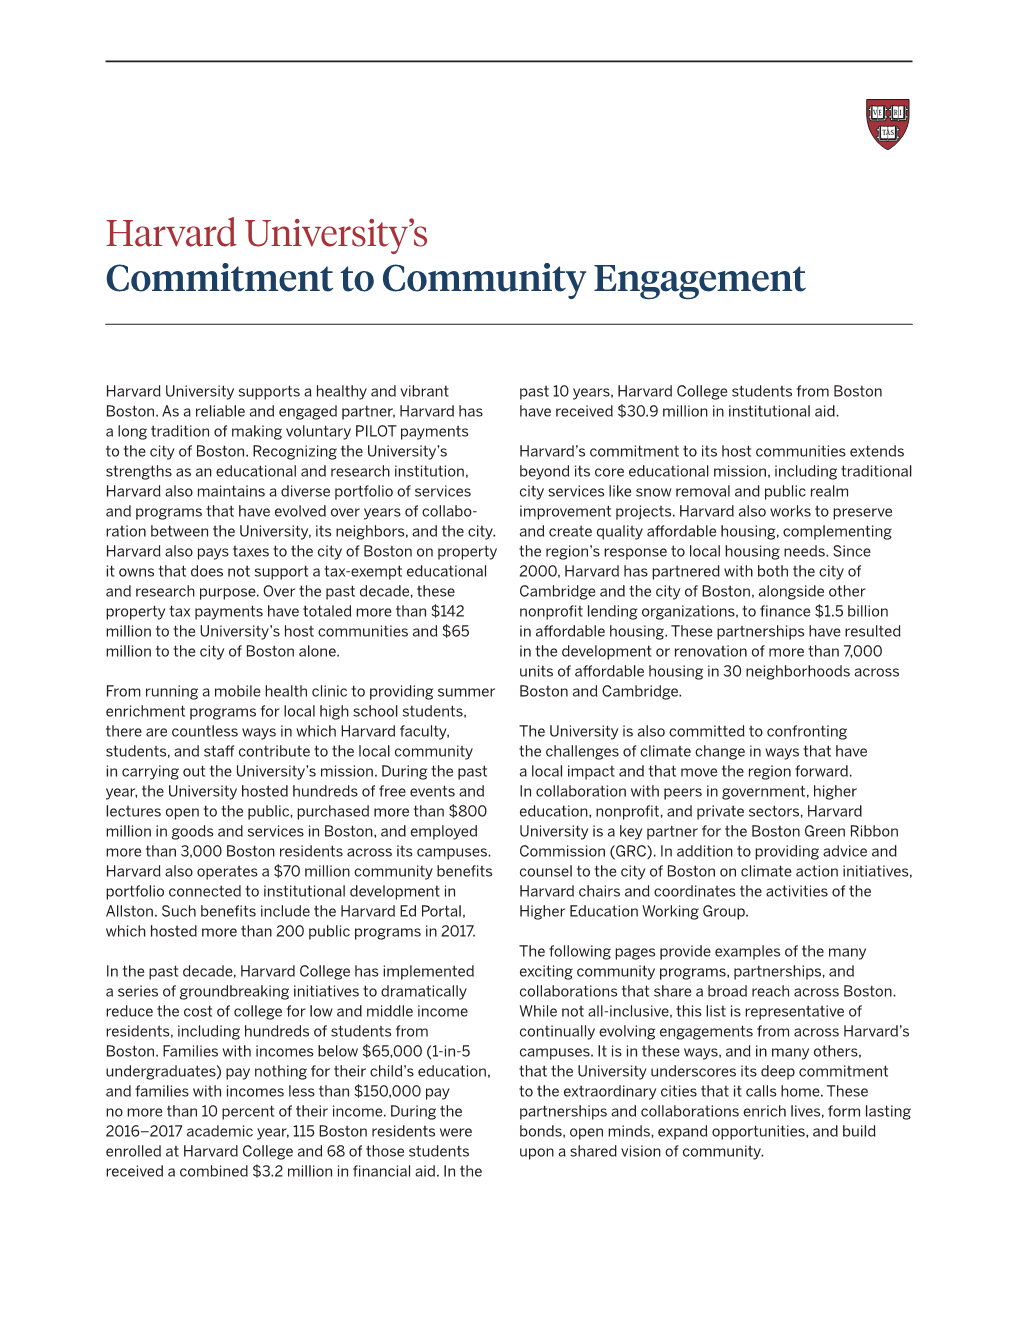 Harvard University's Commitment to Community Engagement